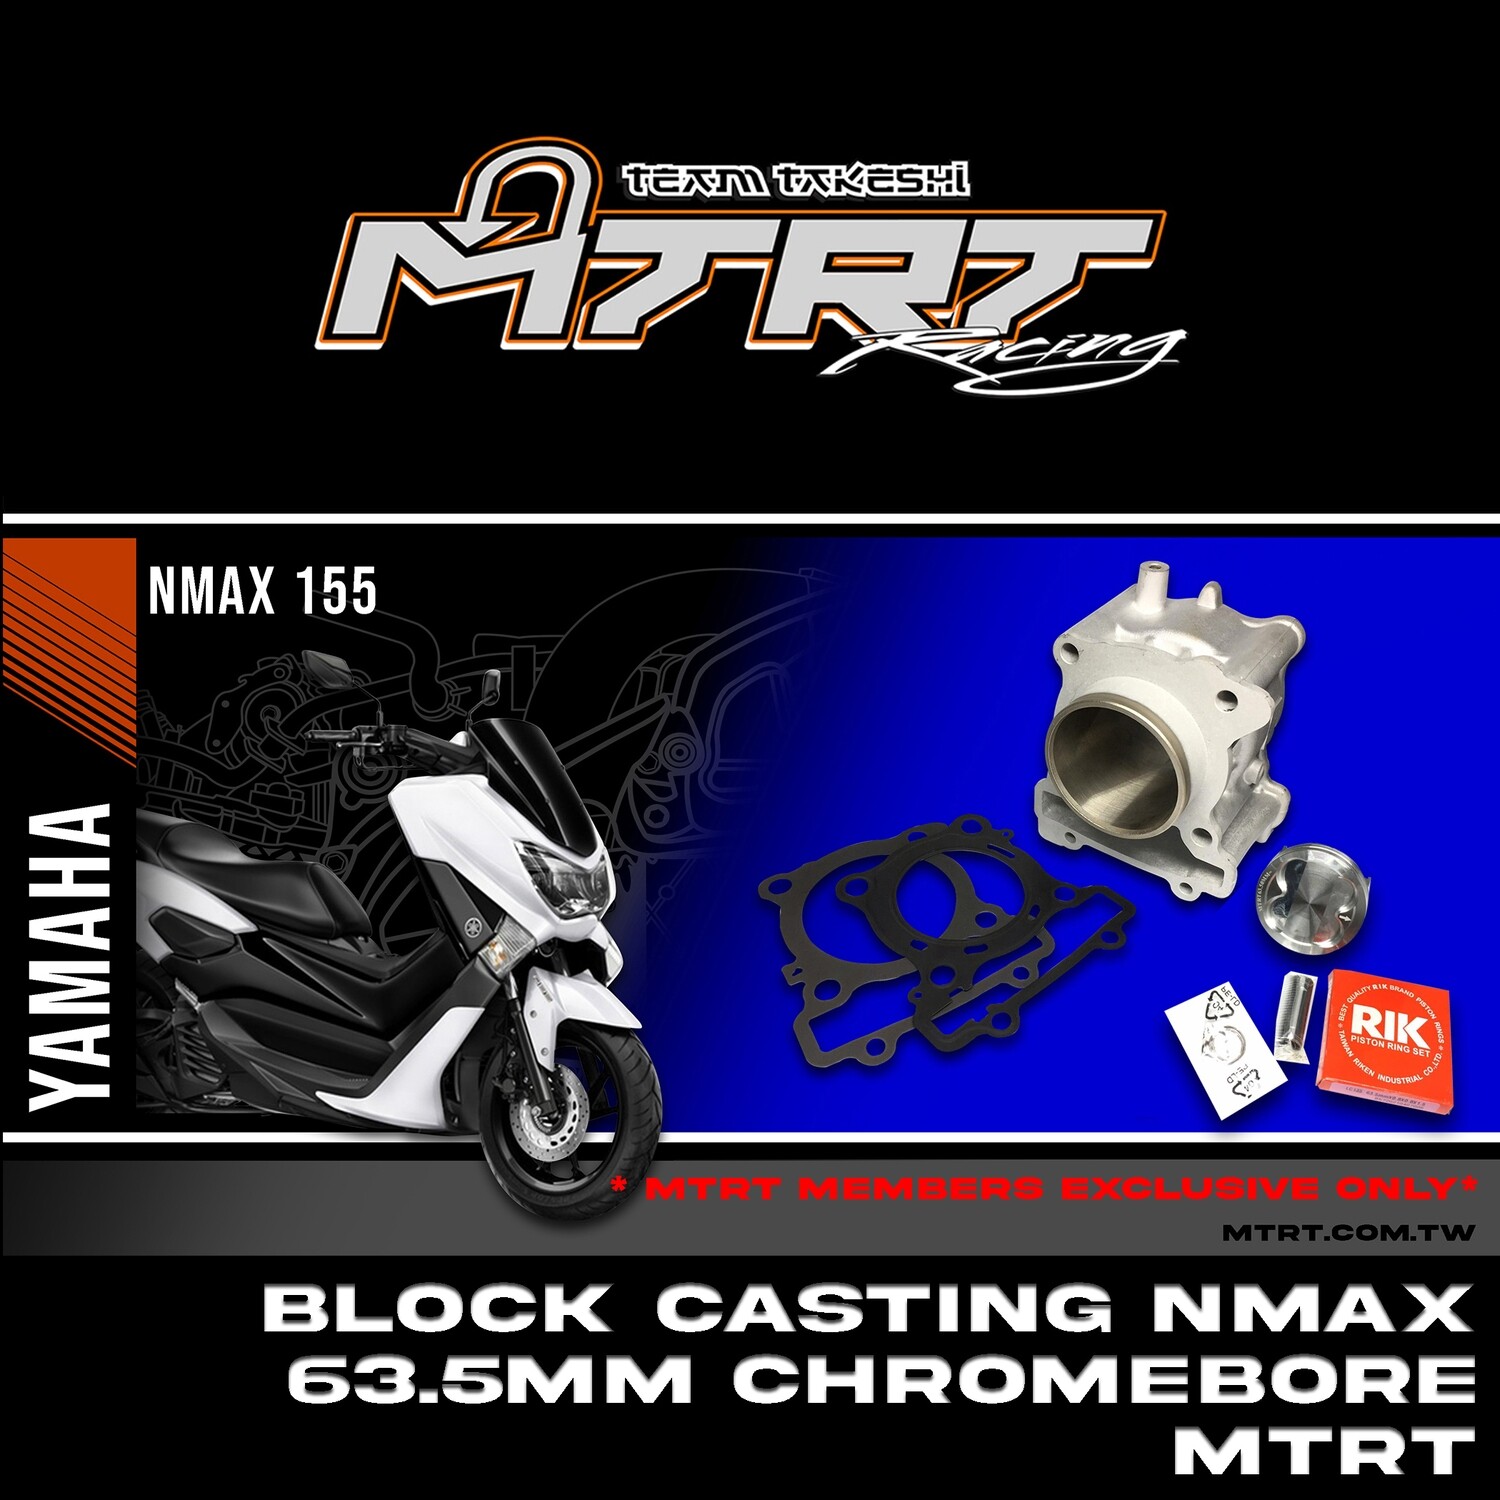 BLOCK Casting NMAX/AEROX/R15 V3  63.5MM Chromebore  MTRT